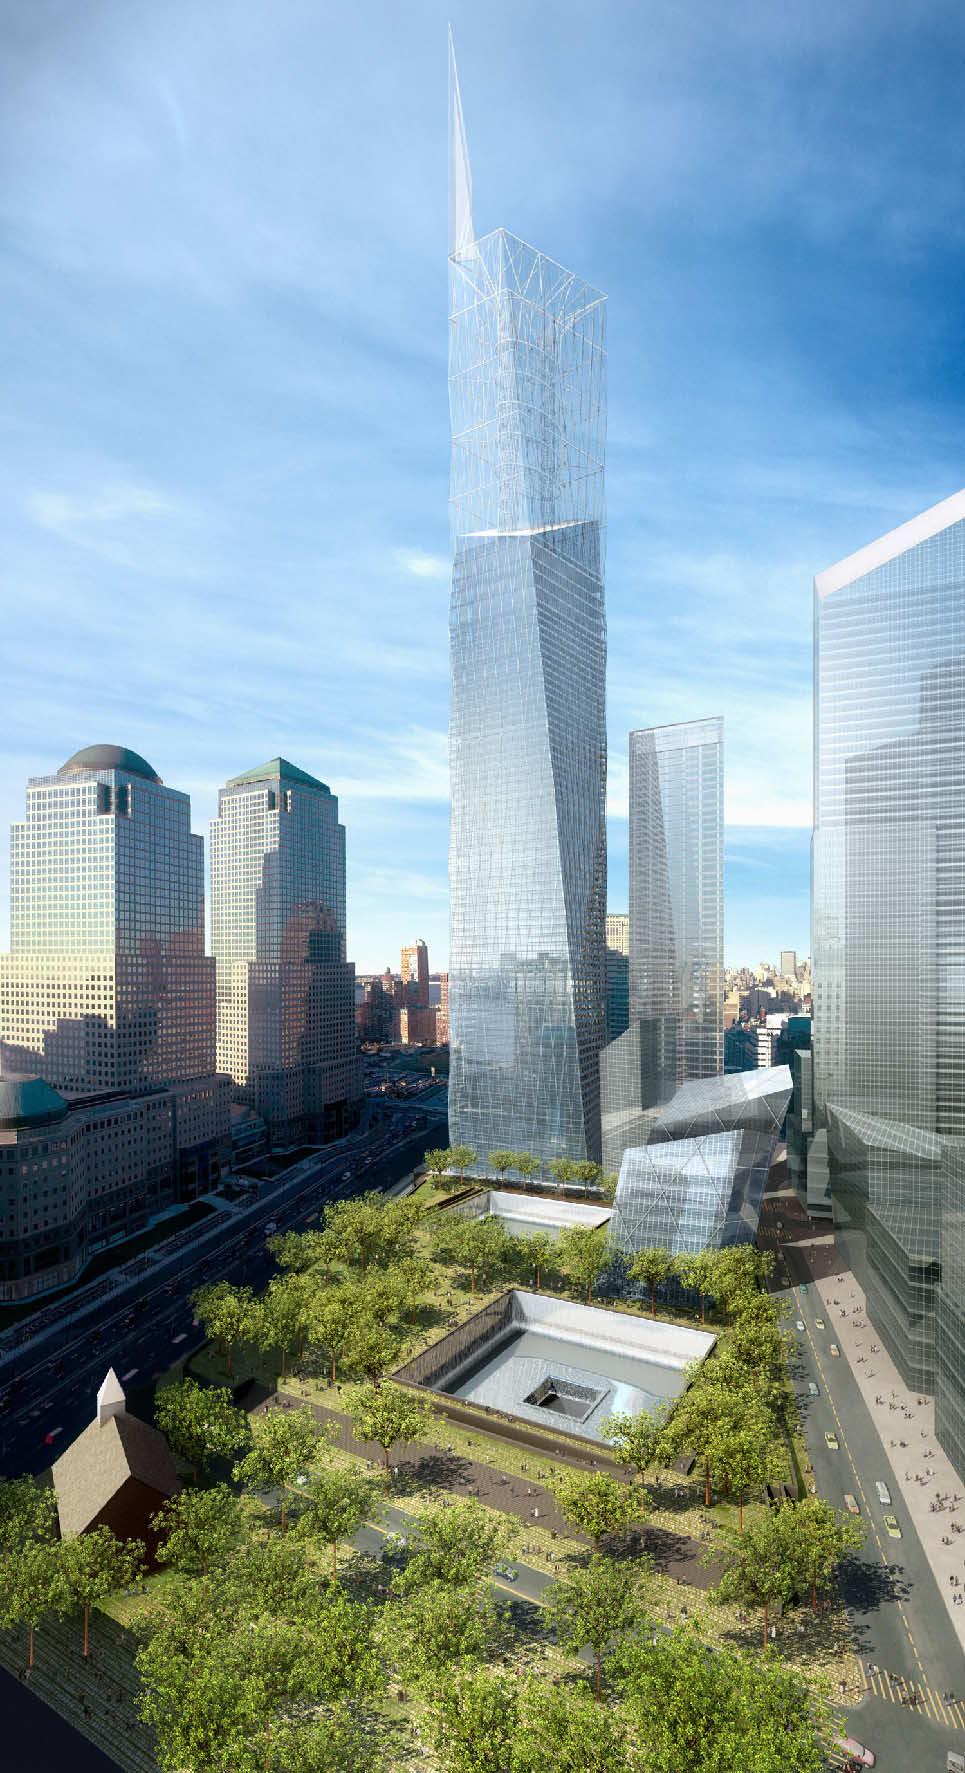 Source: LMDC 1 04 World Trade Center Memorial and Redevelopment